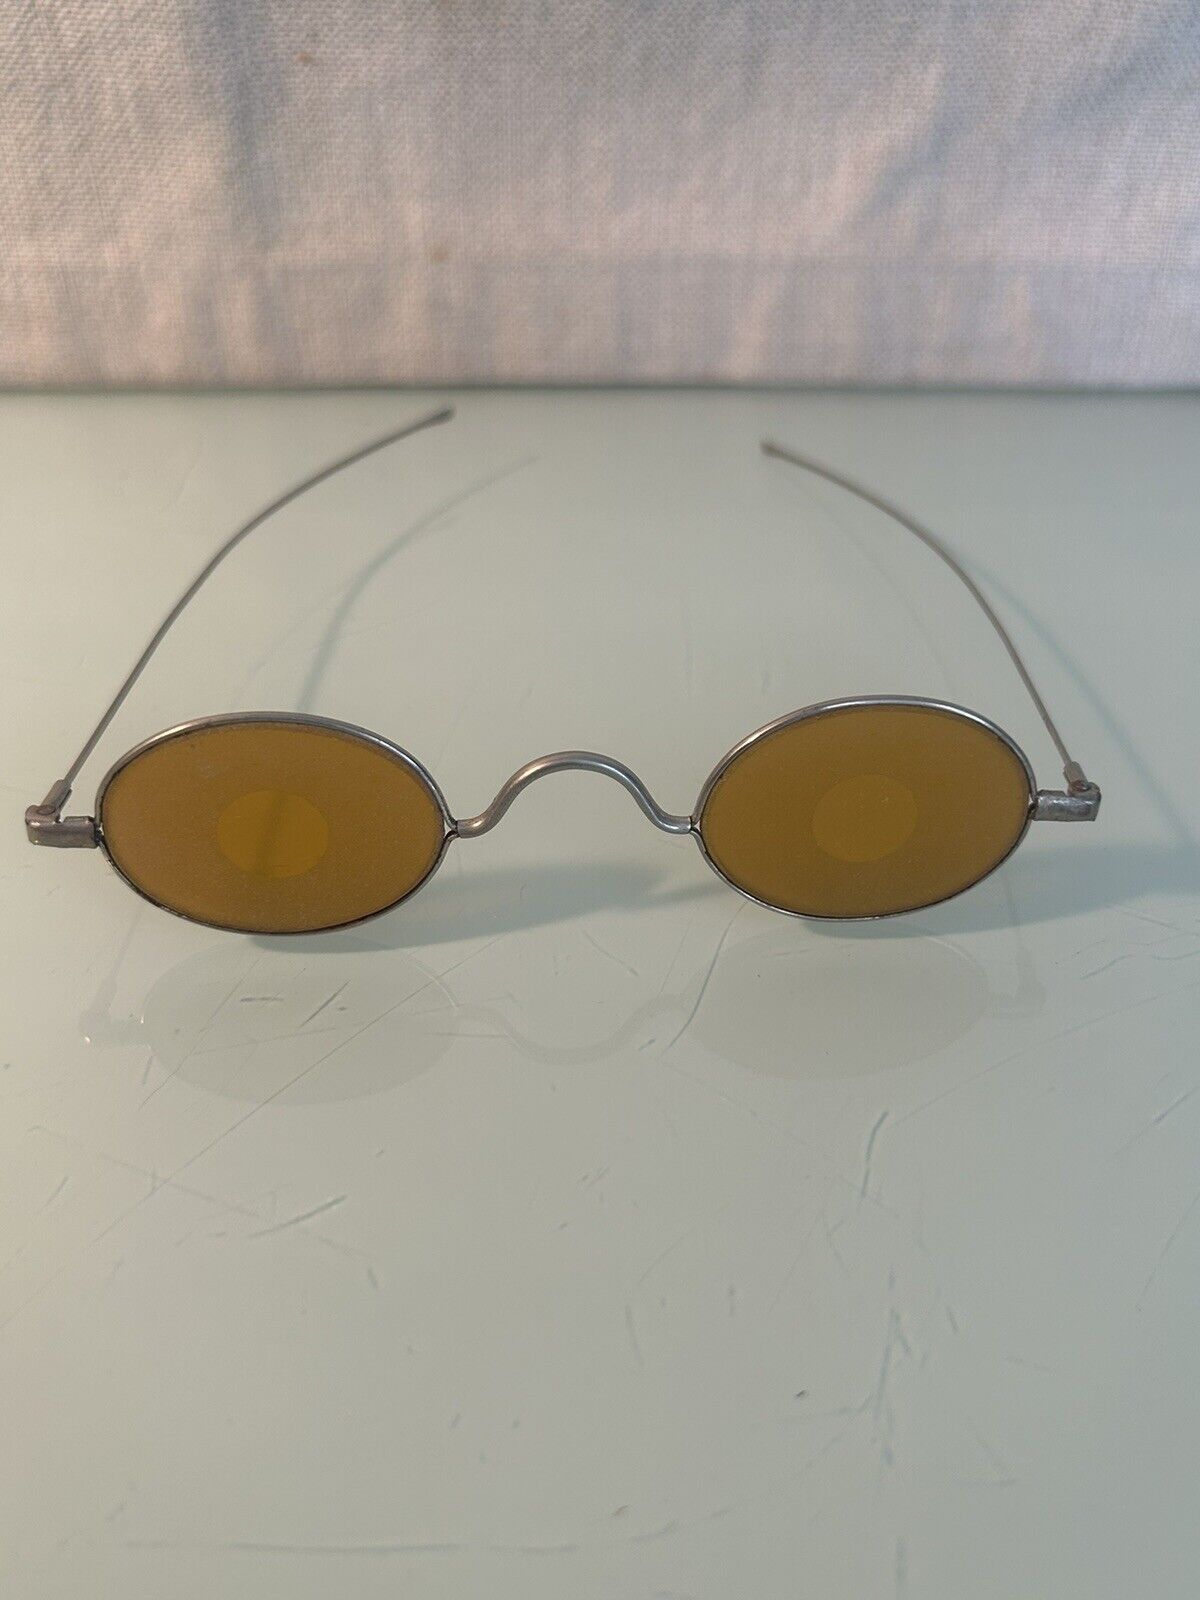 Antique Civil War Sharpshooter Eye Glasses Frosted Amber Lenses Wire Frames